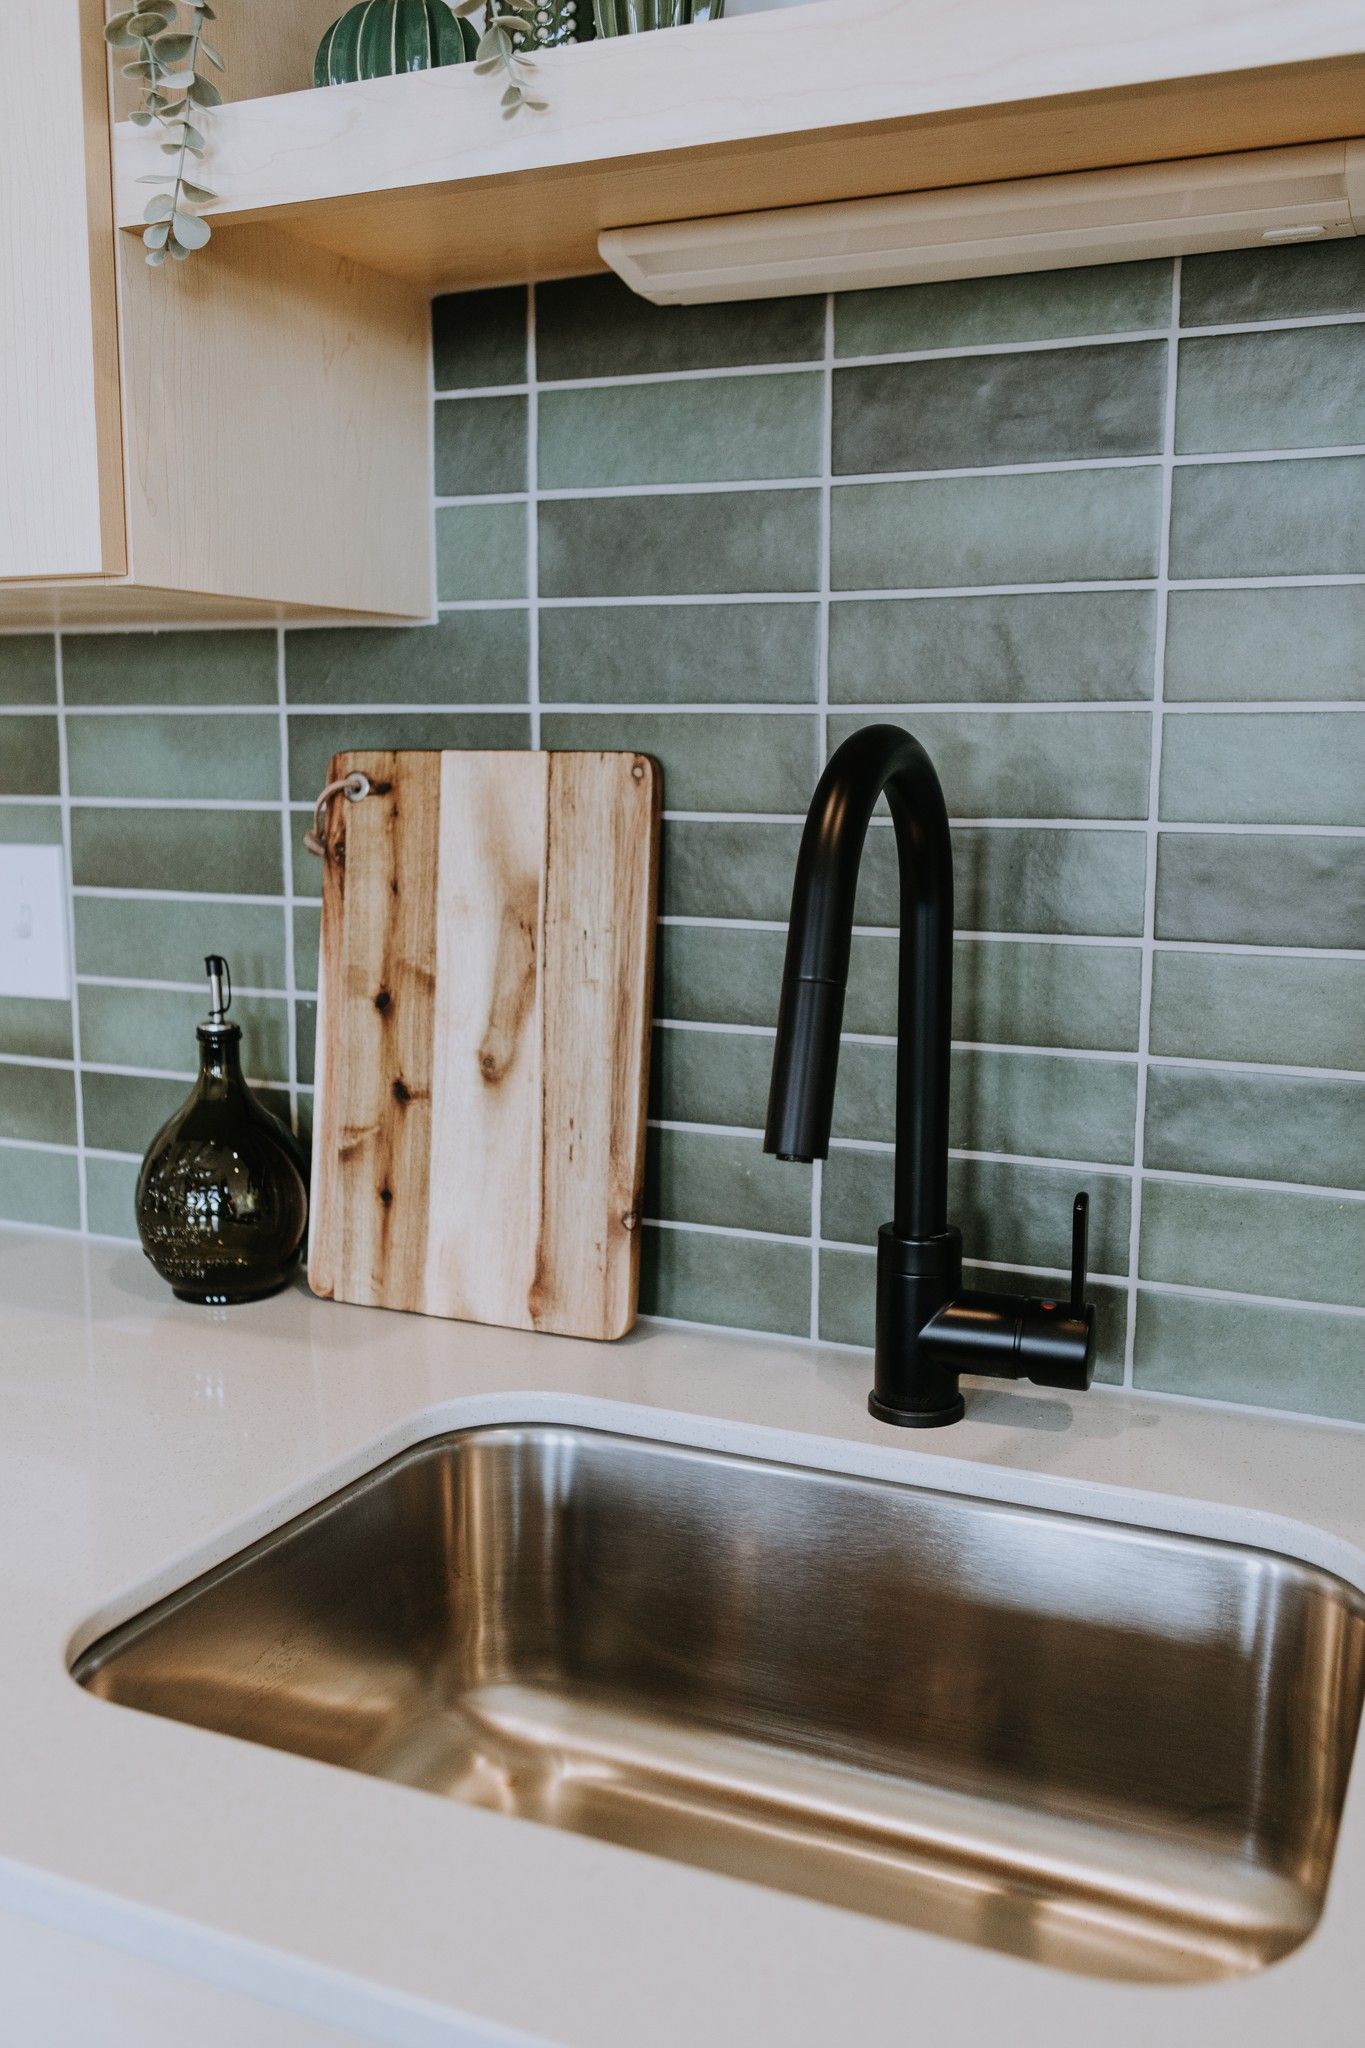 green tile kitchen backsplash with modern sink fixture